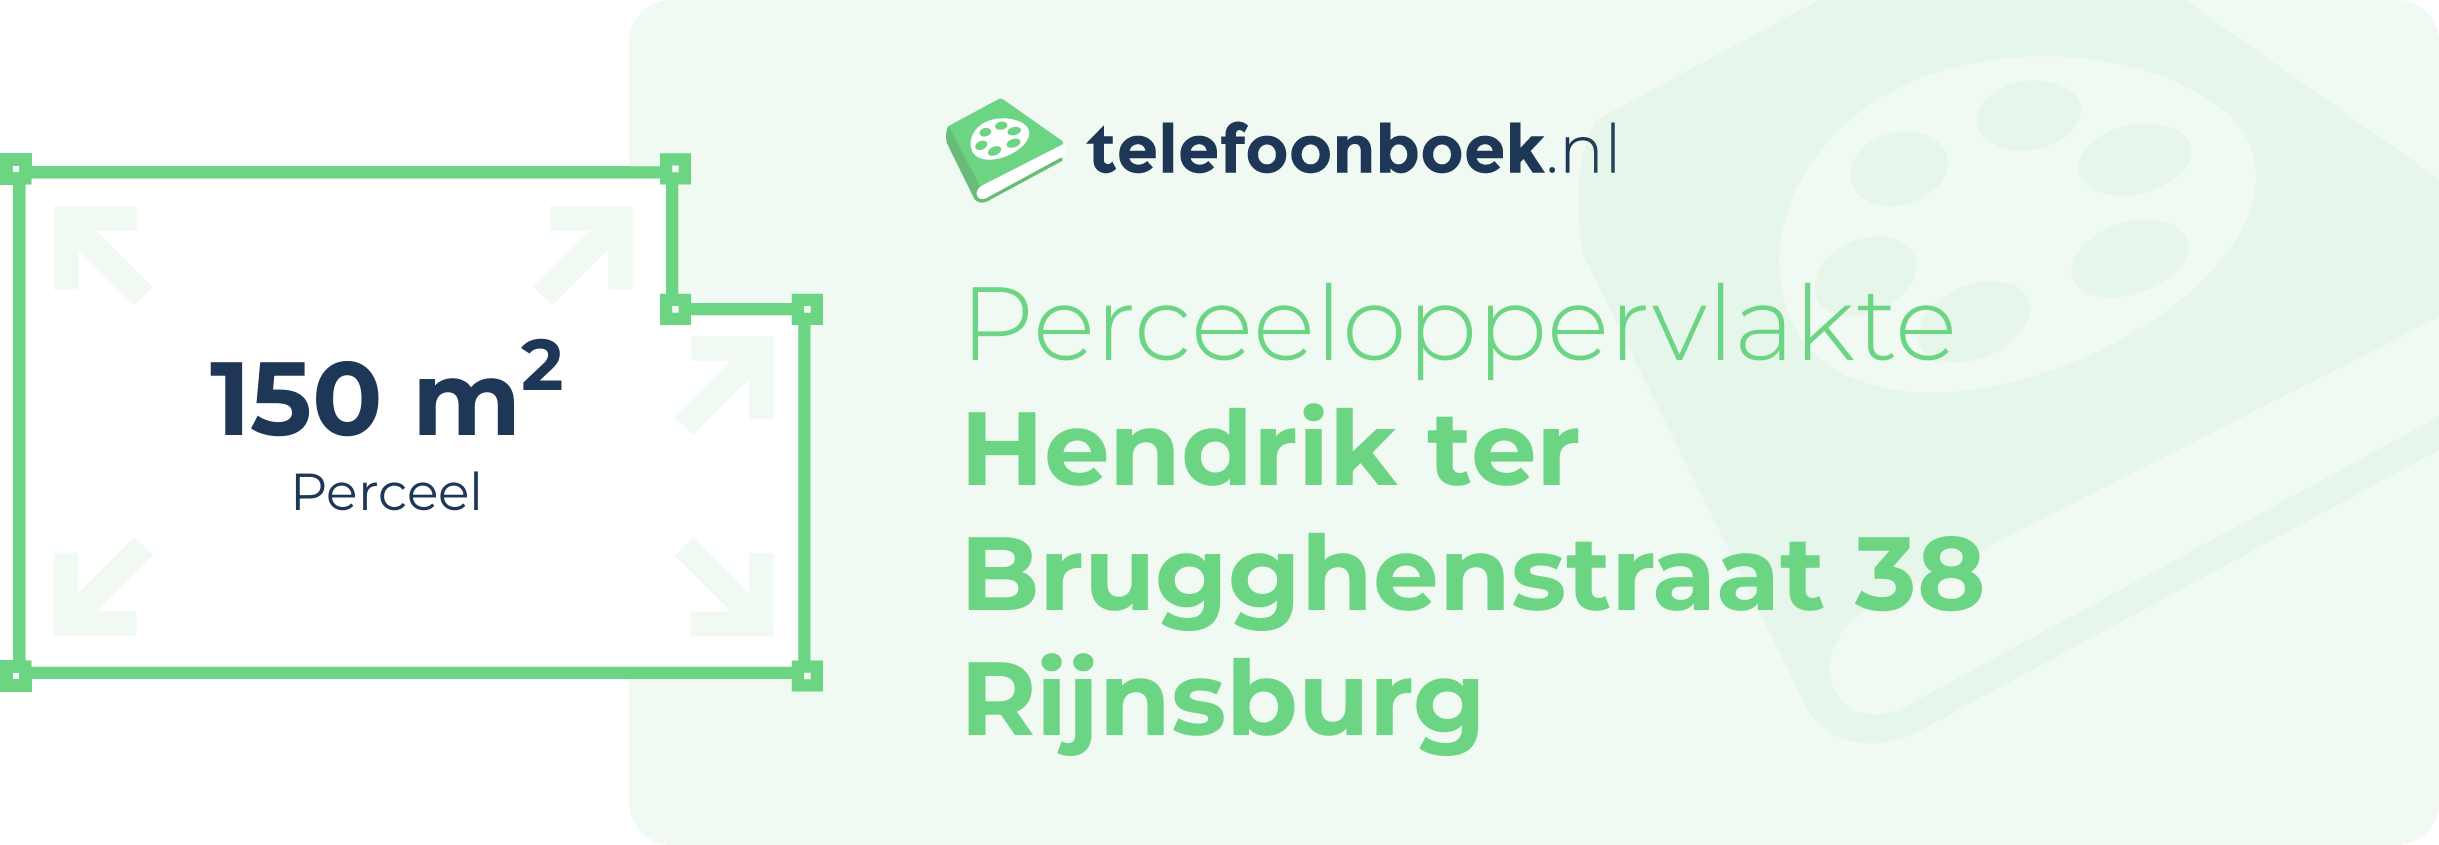 Perceeloppervlakte Hendrik Ter Brugghenstraat 38 Rijnsburg